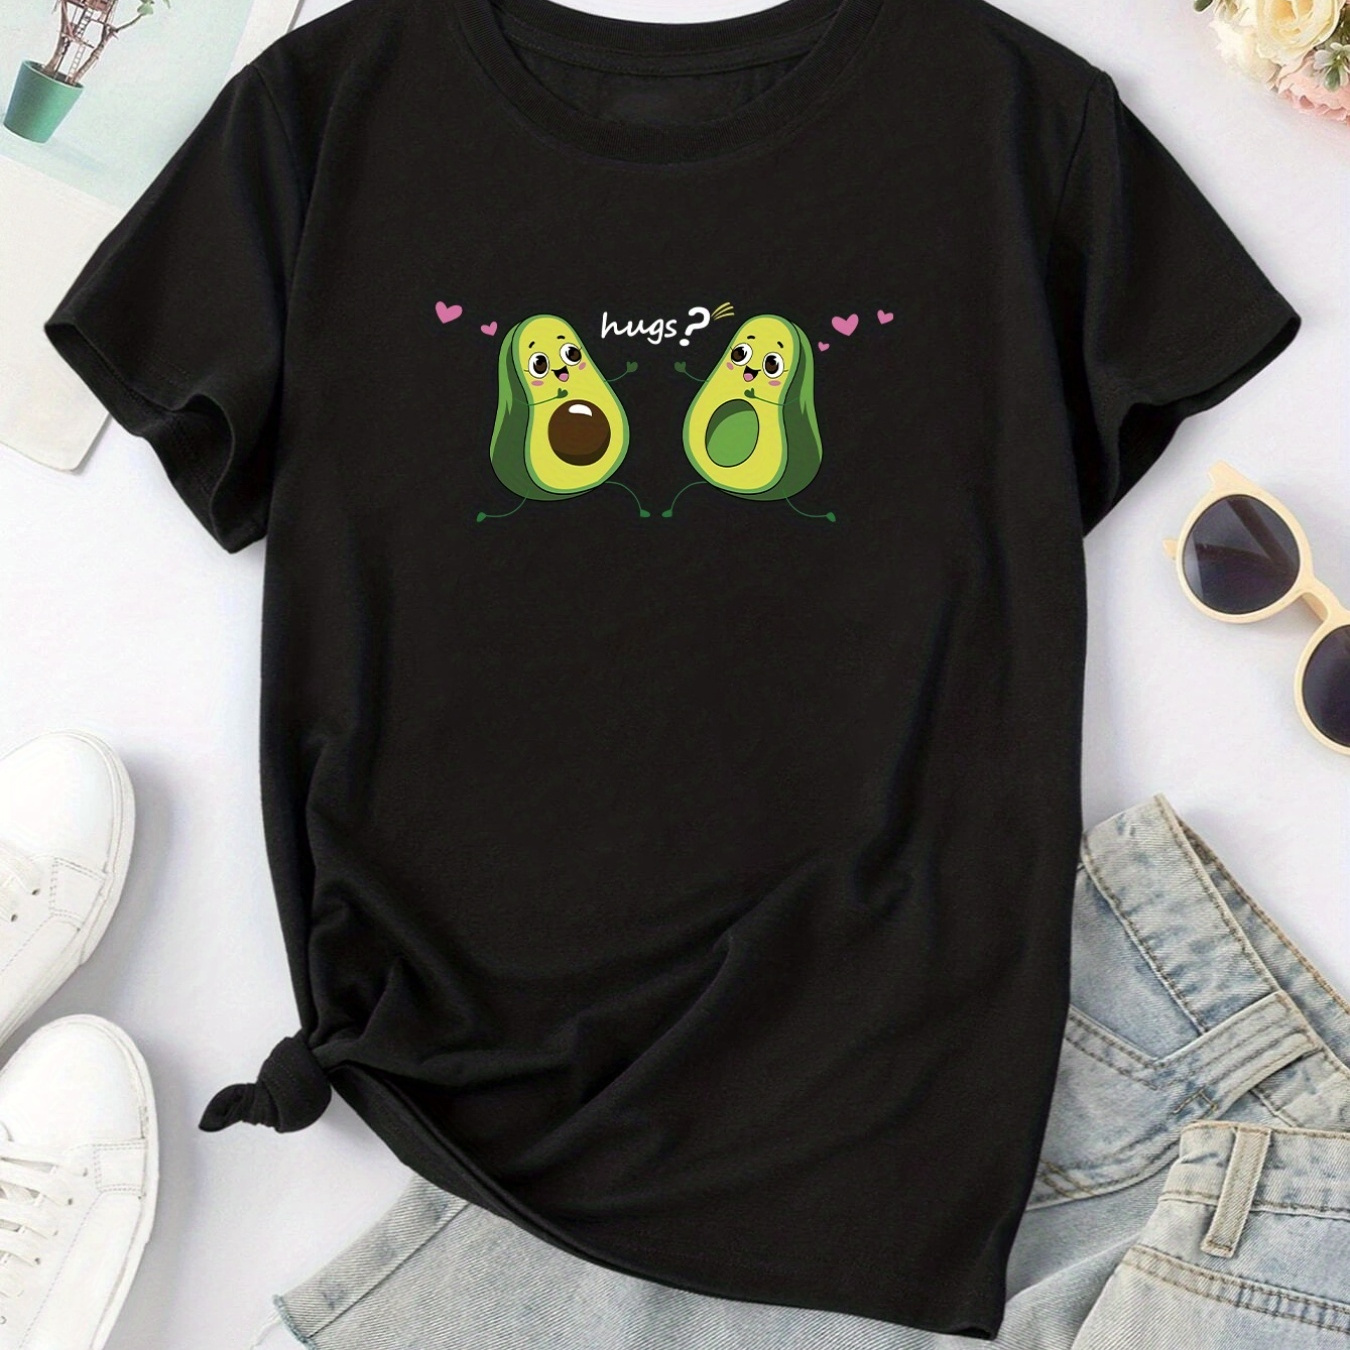 

Avocado & Hugs Print T-shirt, Casual Crew Neck Short Sleeve T-shirt For Spring & Summer, Women's Clothing